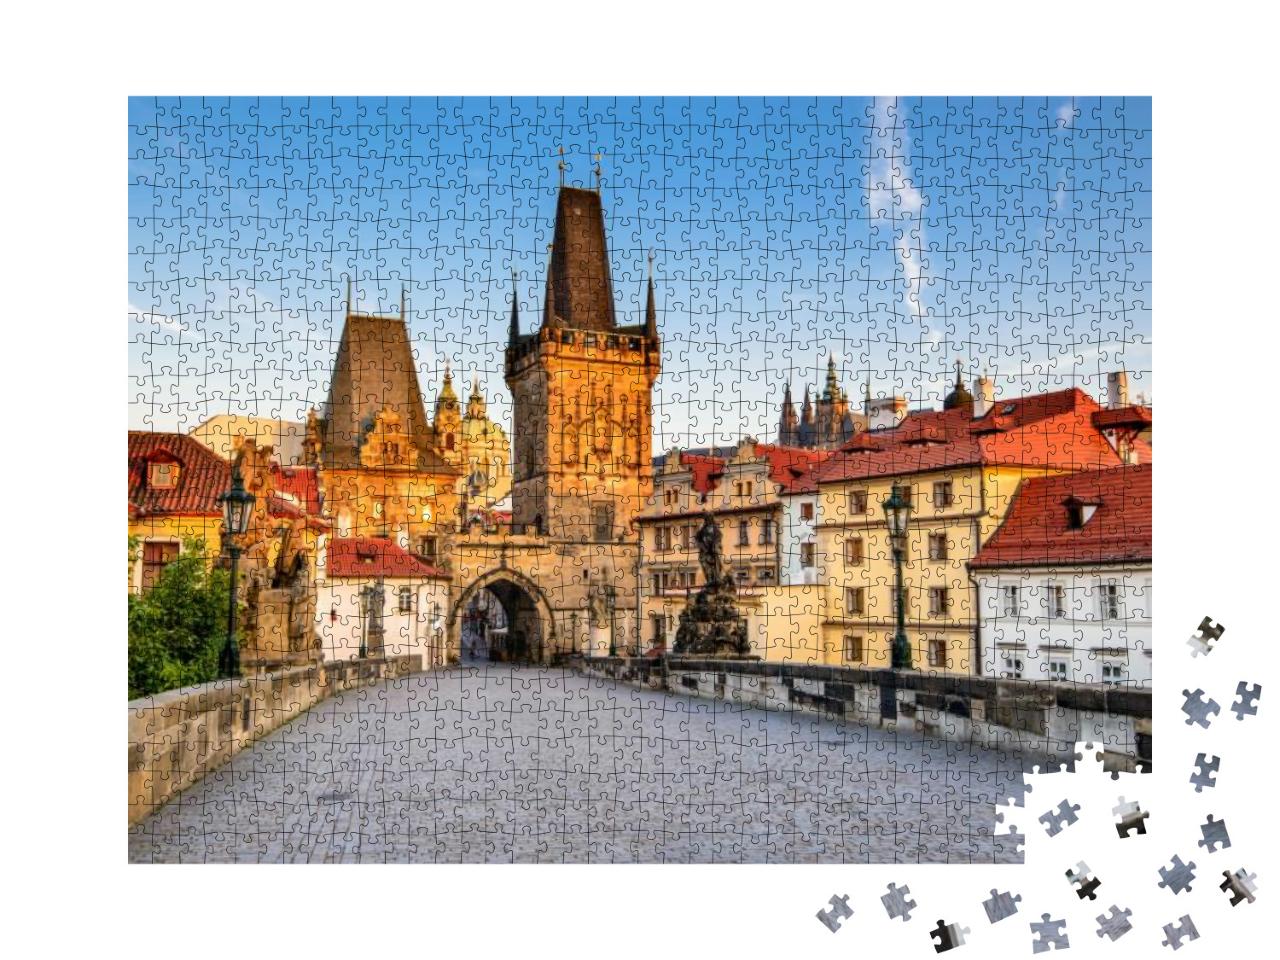 Prague, Czech Republic. Charles Bridge with Its Statuette... Jigsaw Puzzle with 1000 pieces